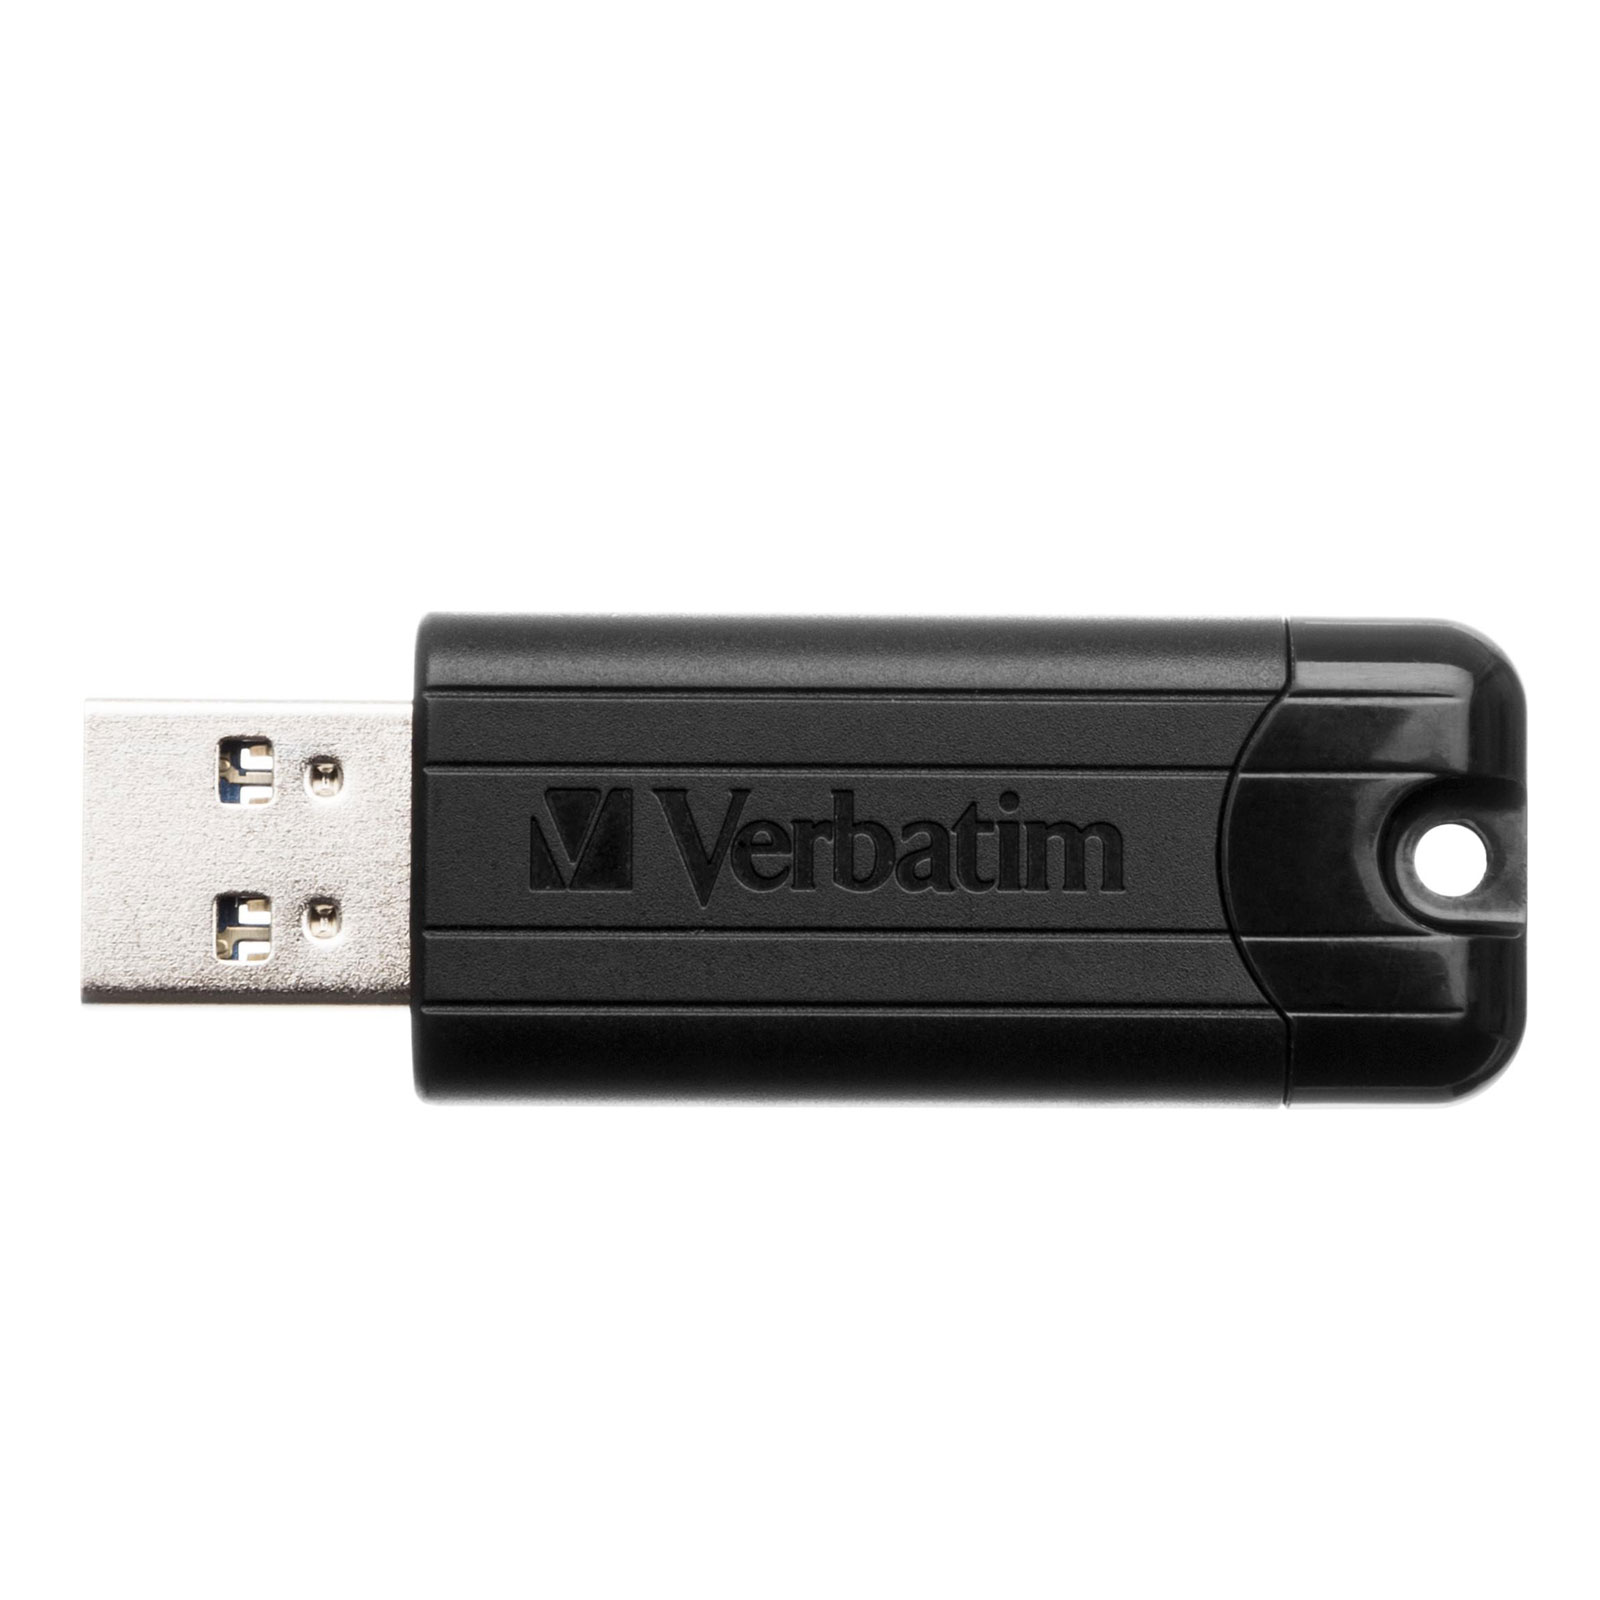 VERBATIM Verbatim PinStripe USB 3.0 128GB schwarz USB-Stick